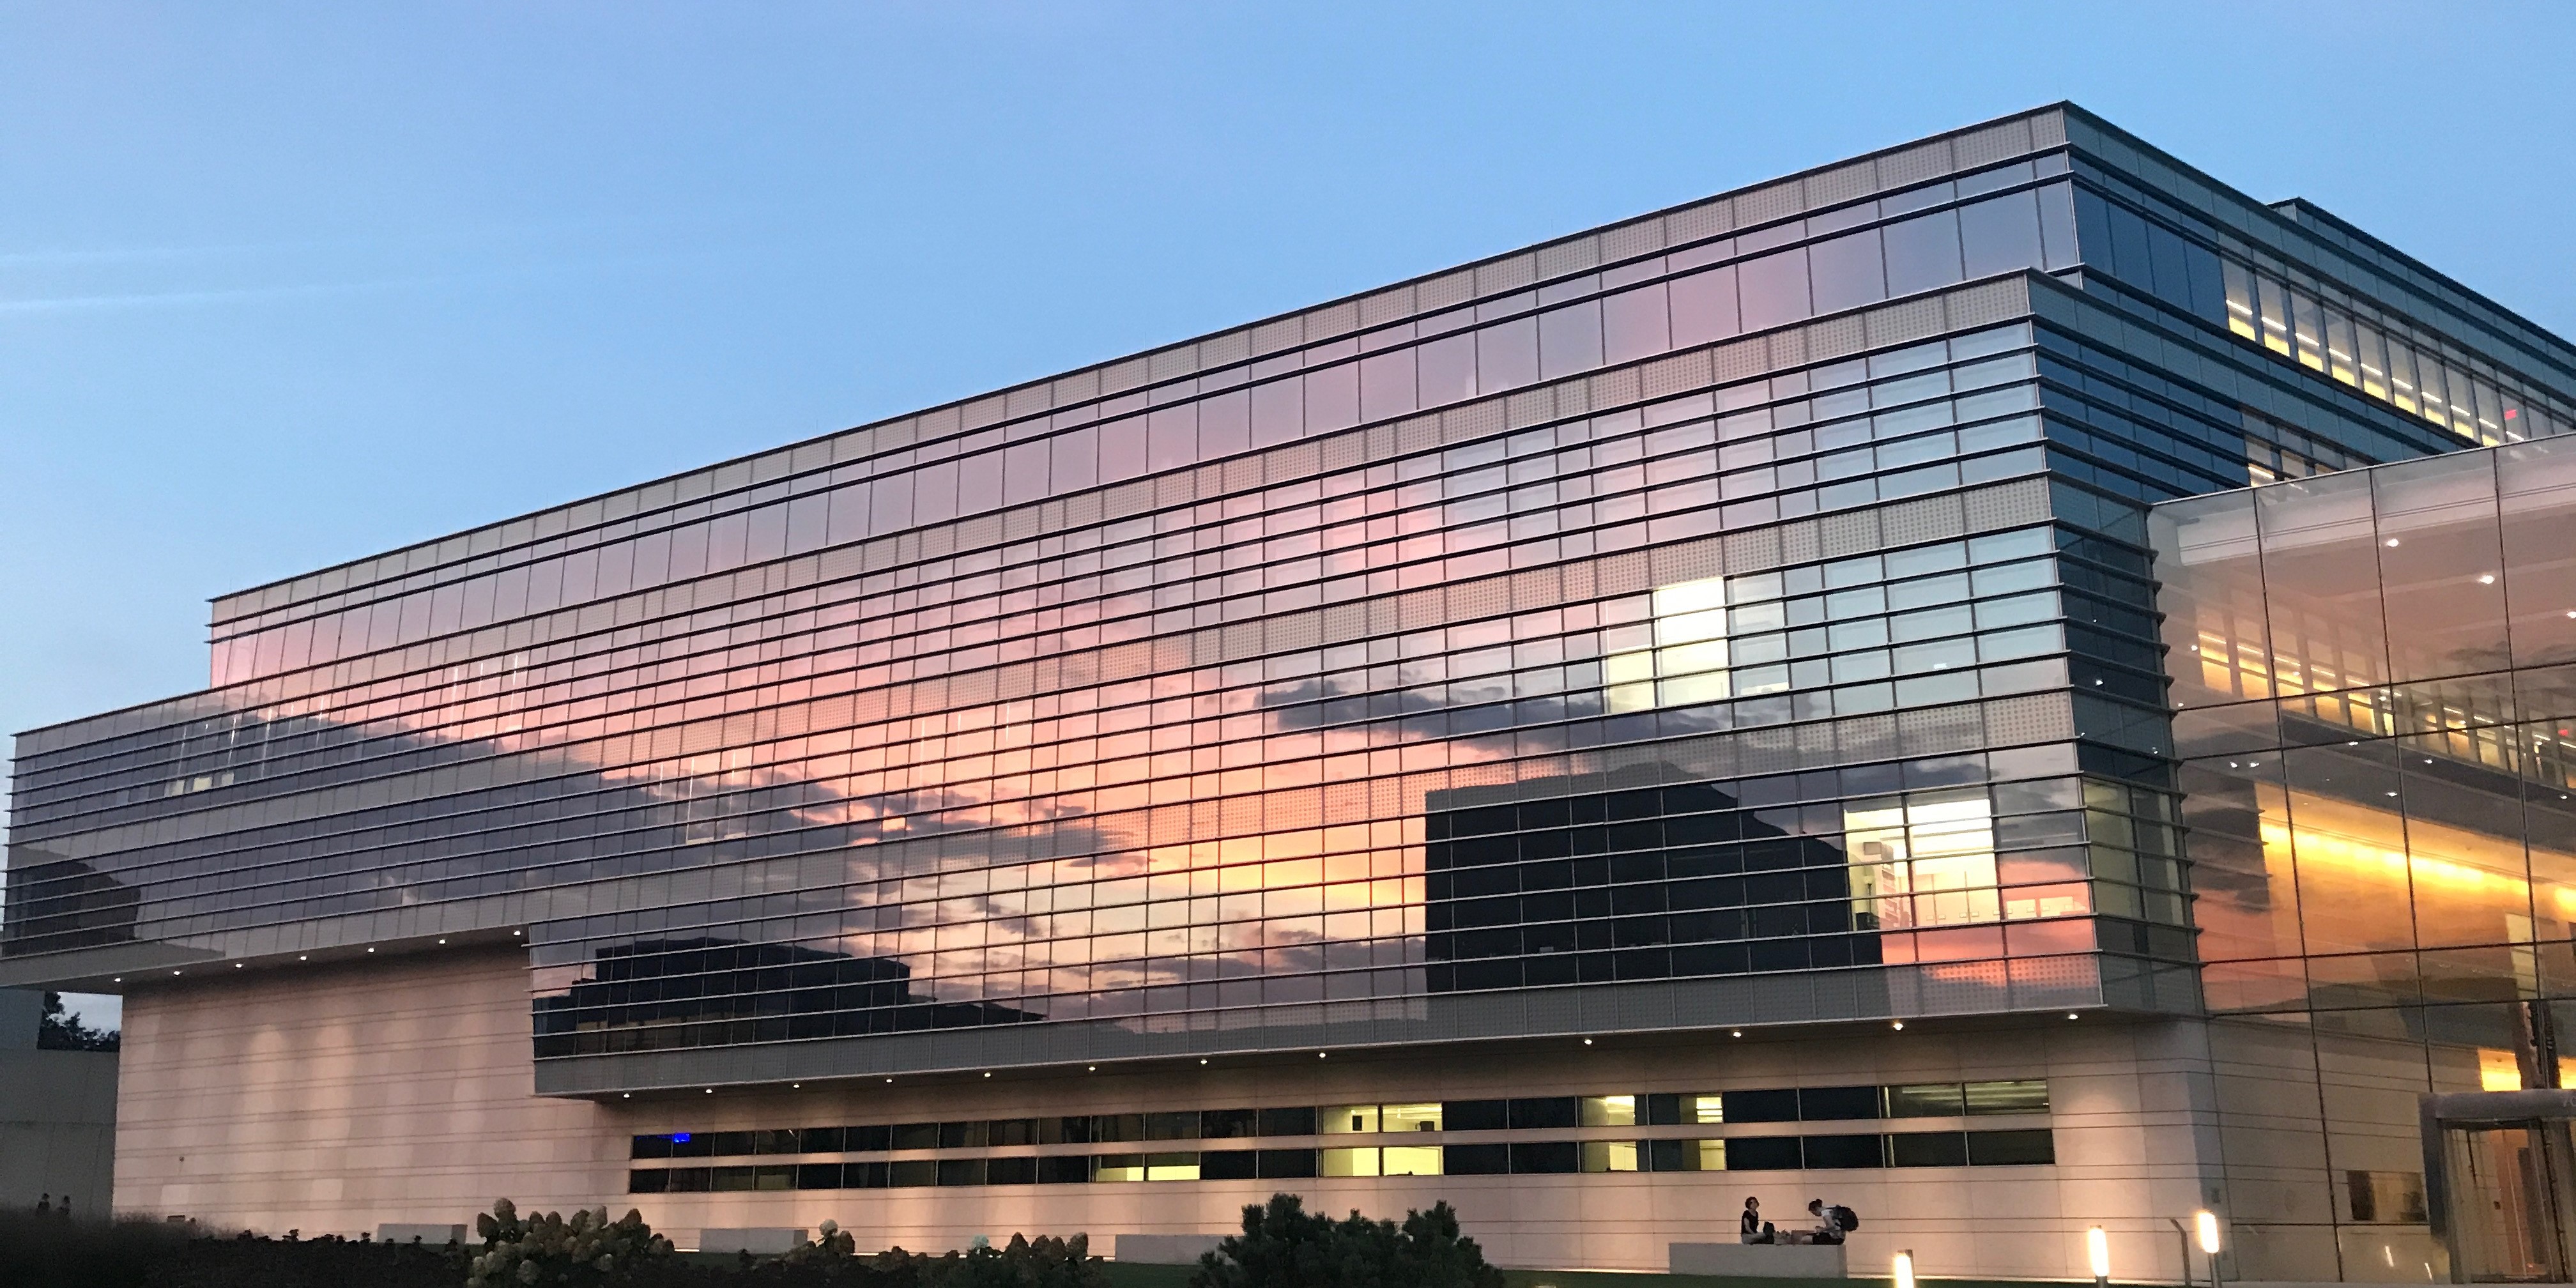 The Ryan Center at sunset.